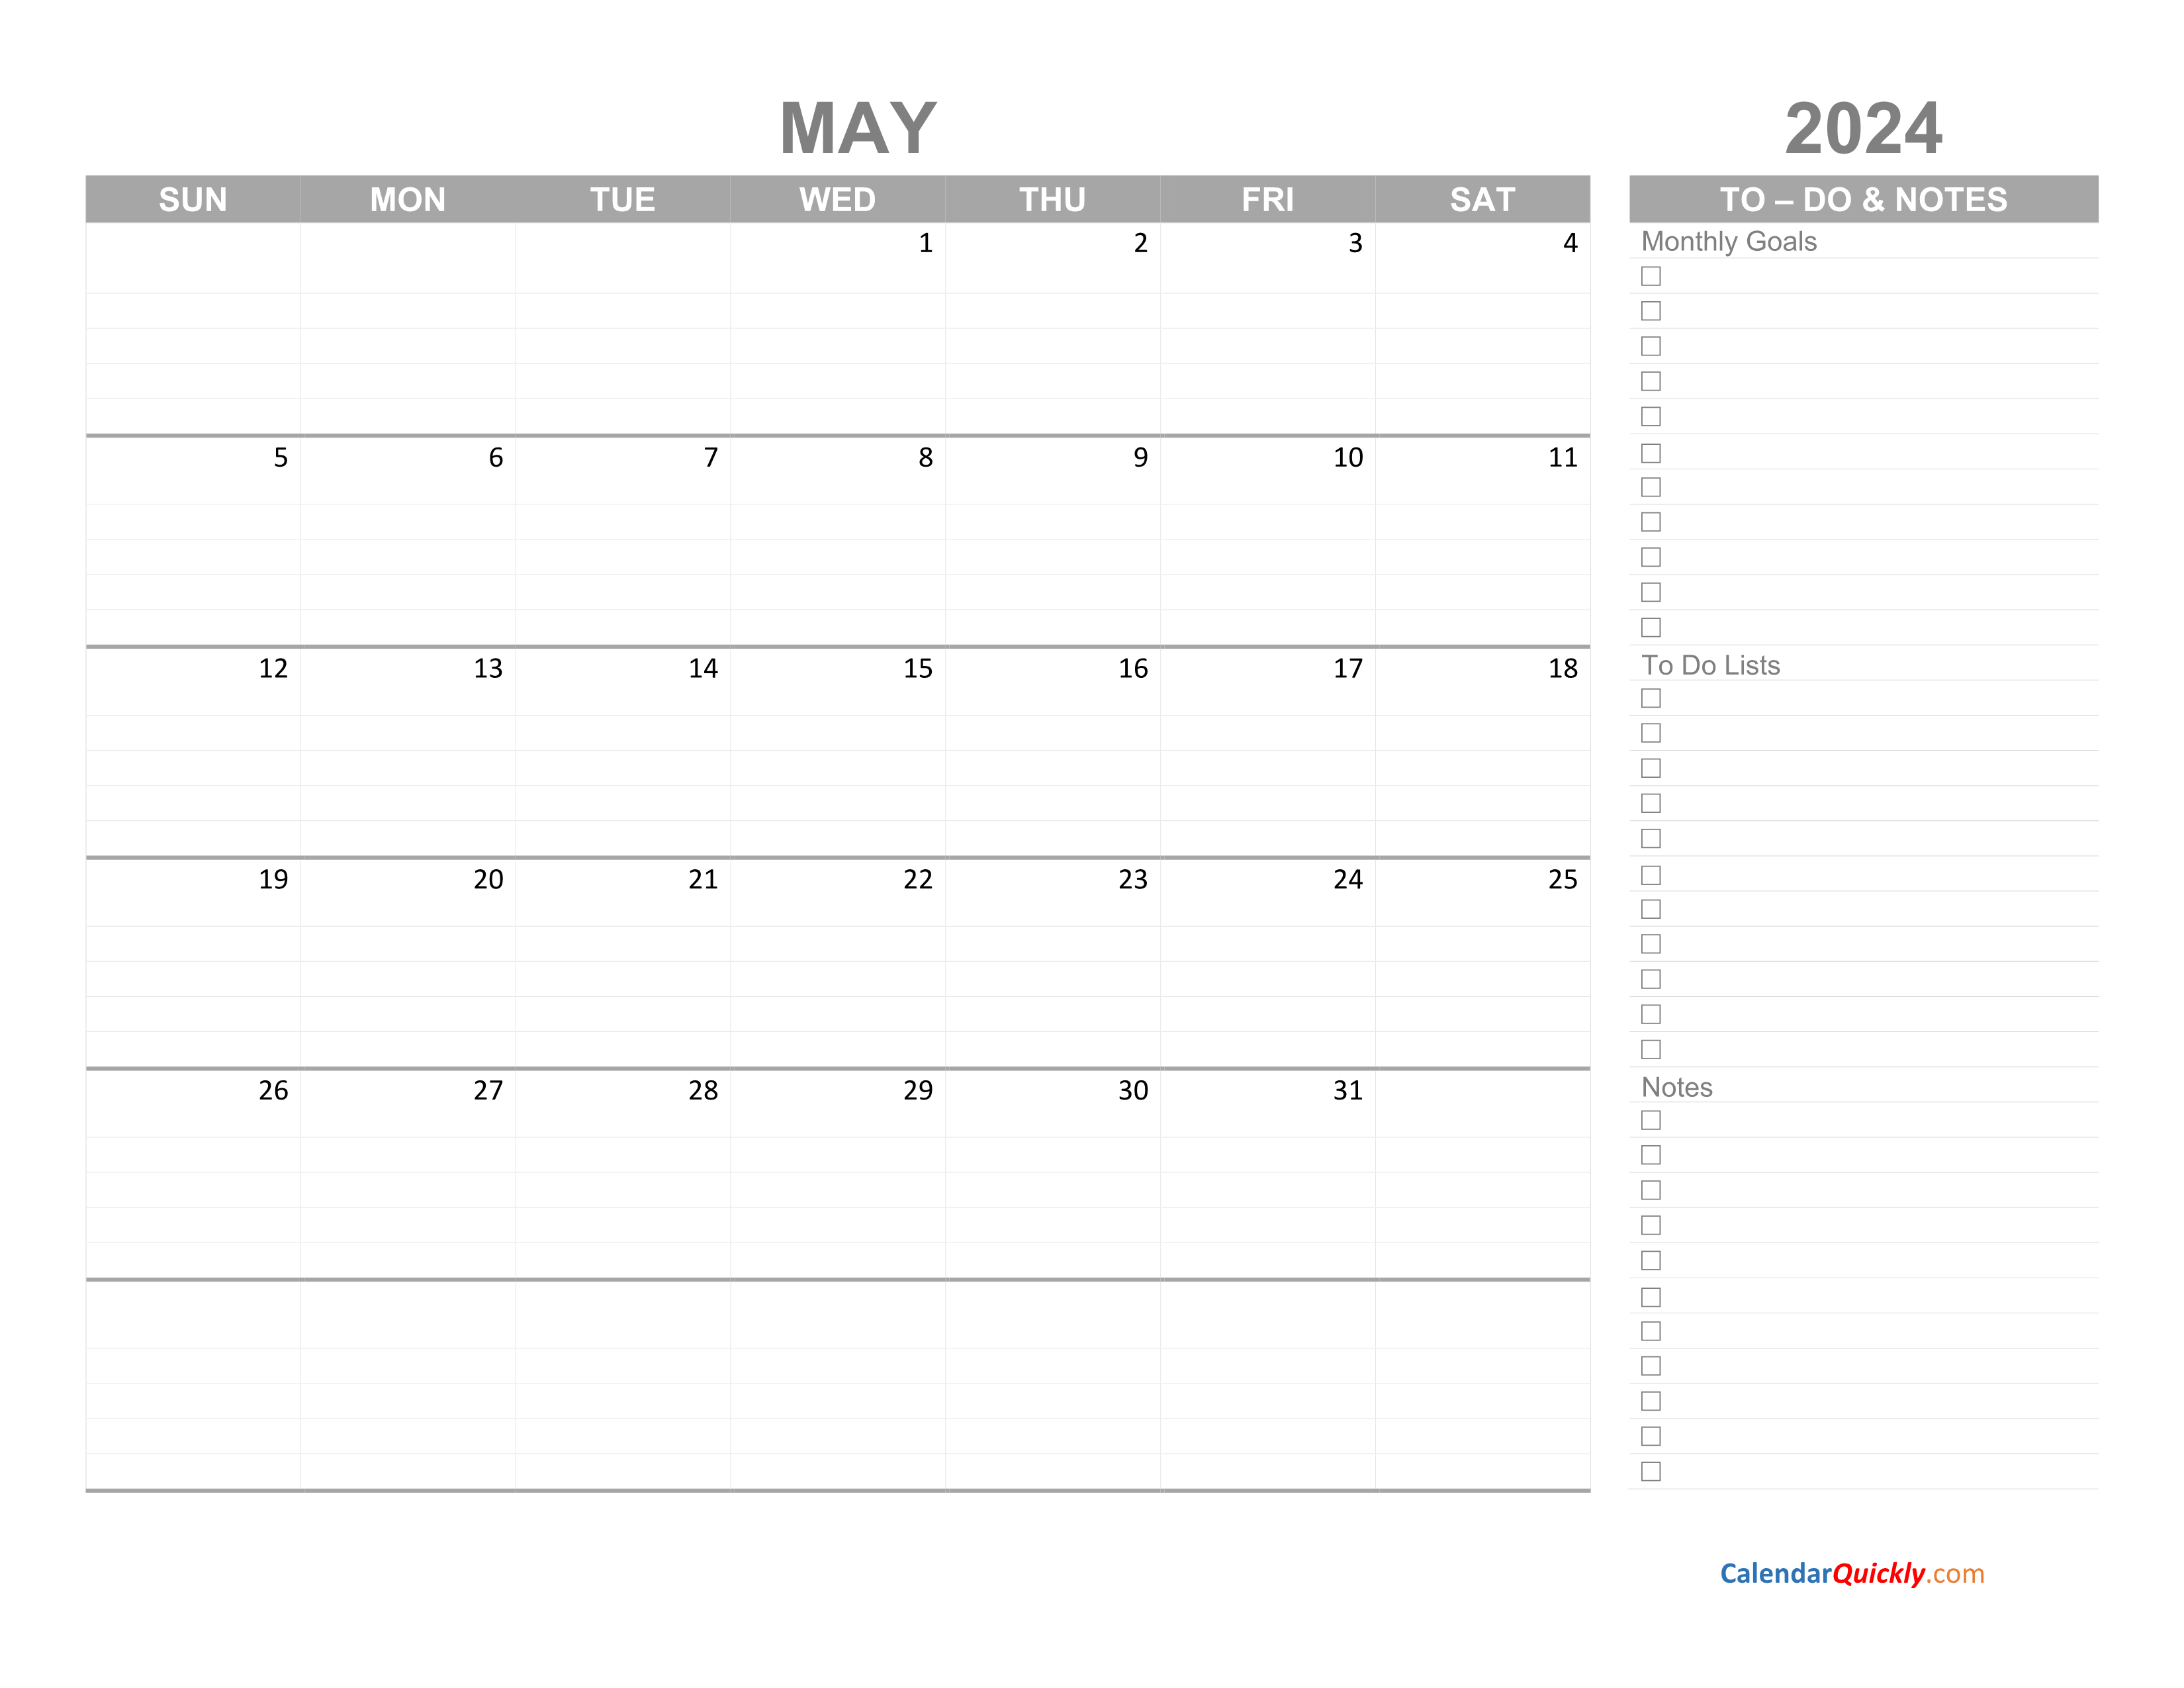 May 2024 Calendar with ToDo List Calendar Quickly